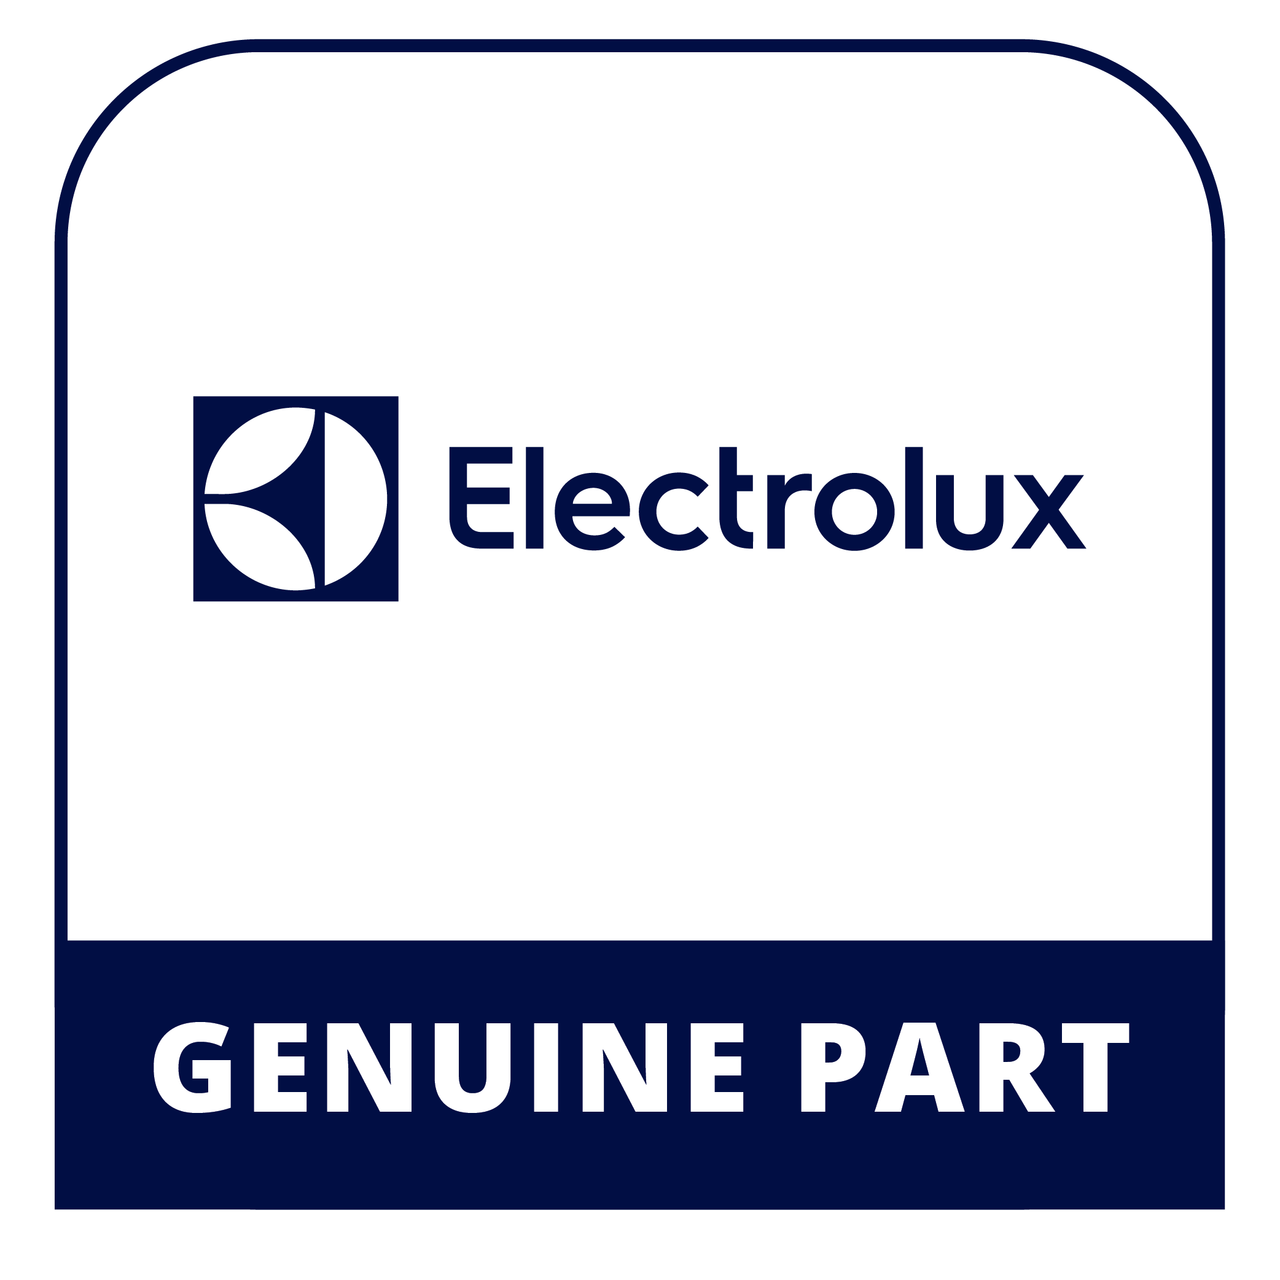 Frigidaire - Electrolux 134287301 Shield - Genuine Electrolux Part